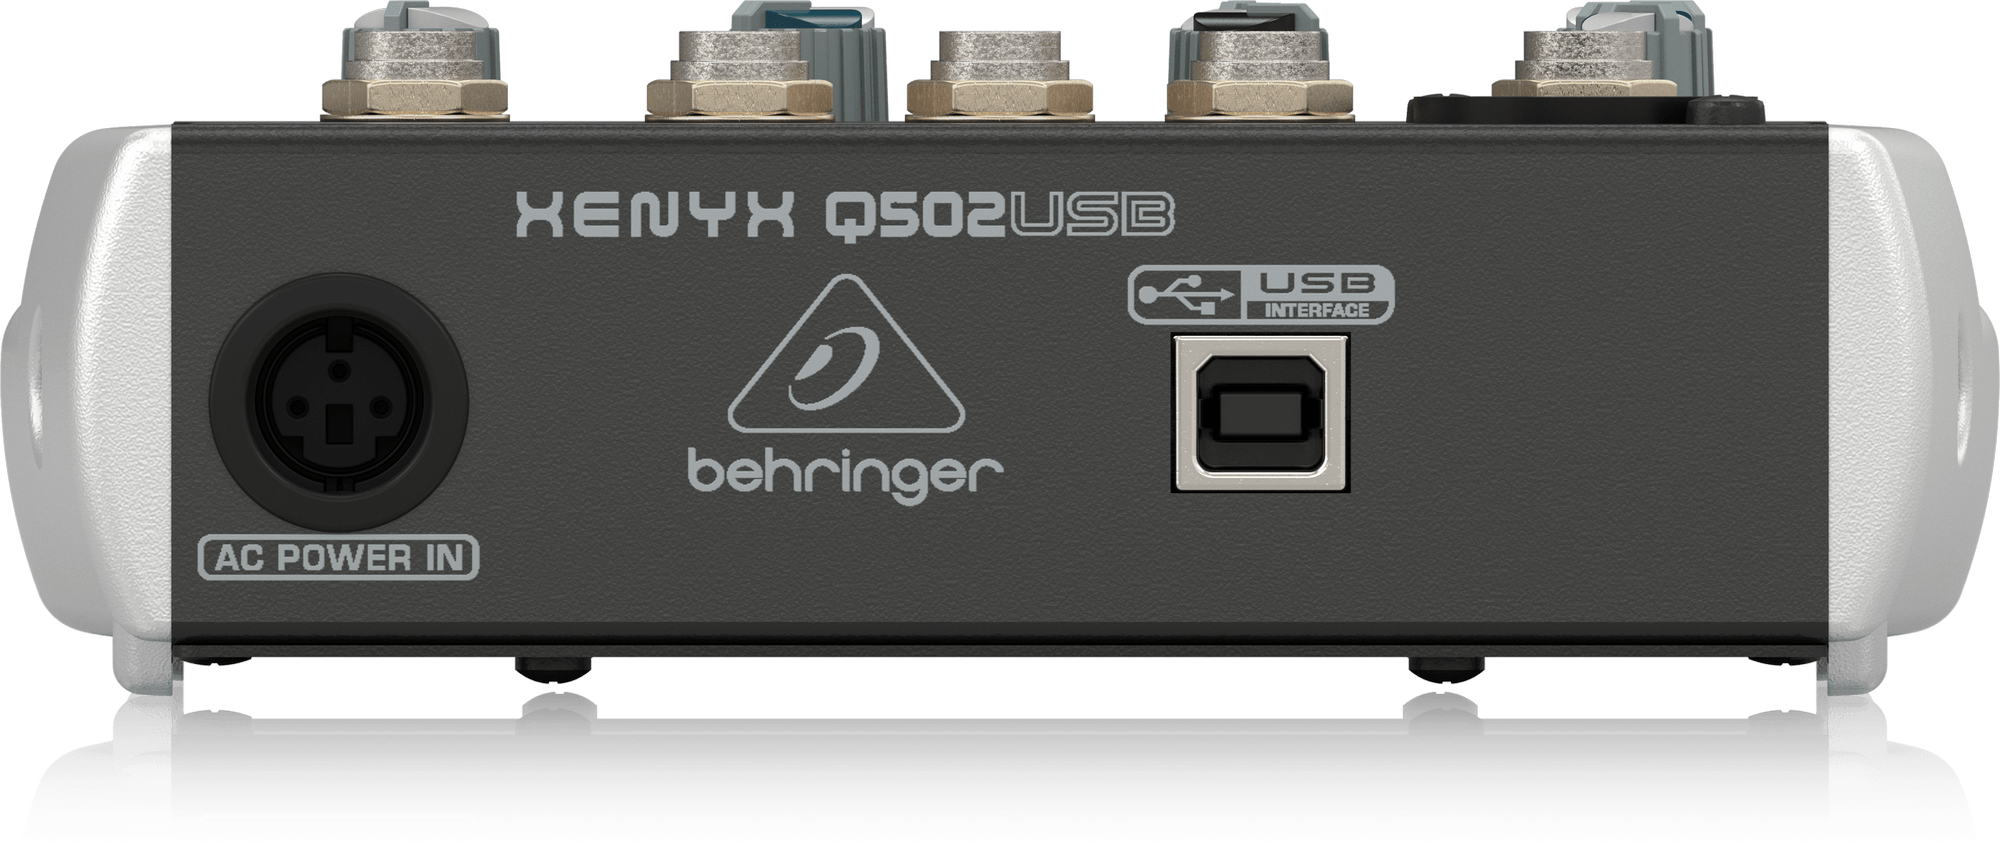 behringer xenyx q502usb mixer with us